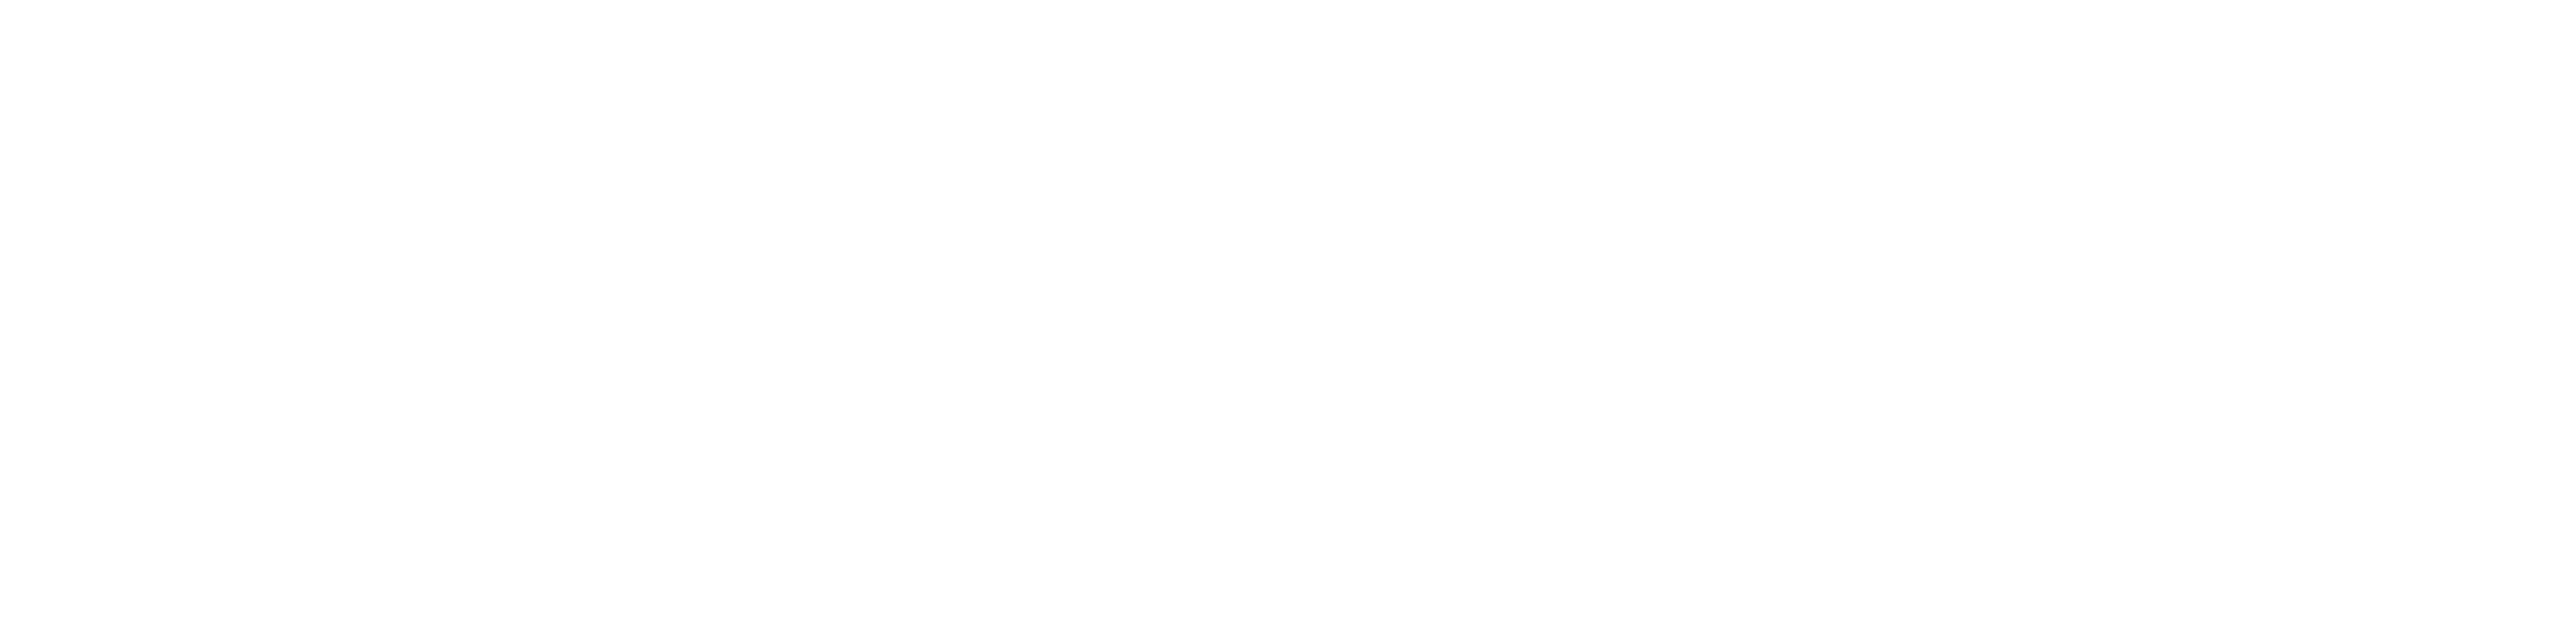 Logo MALTÖÖ